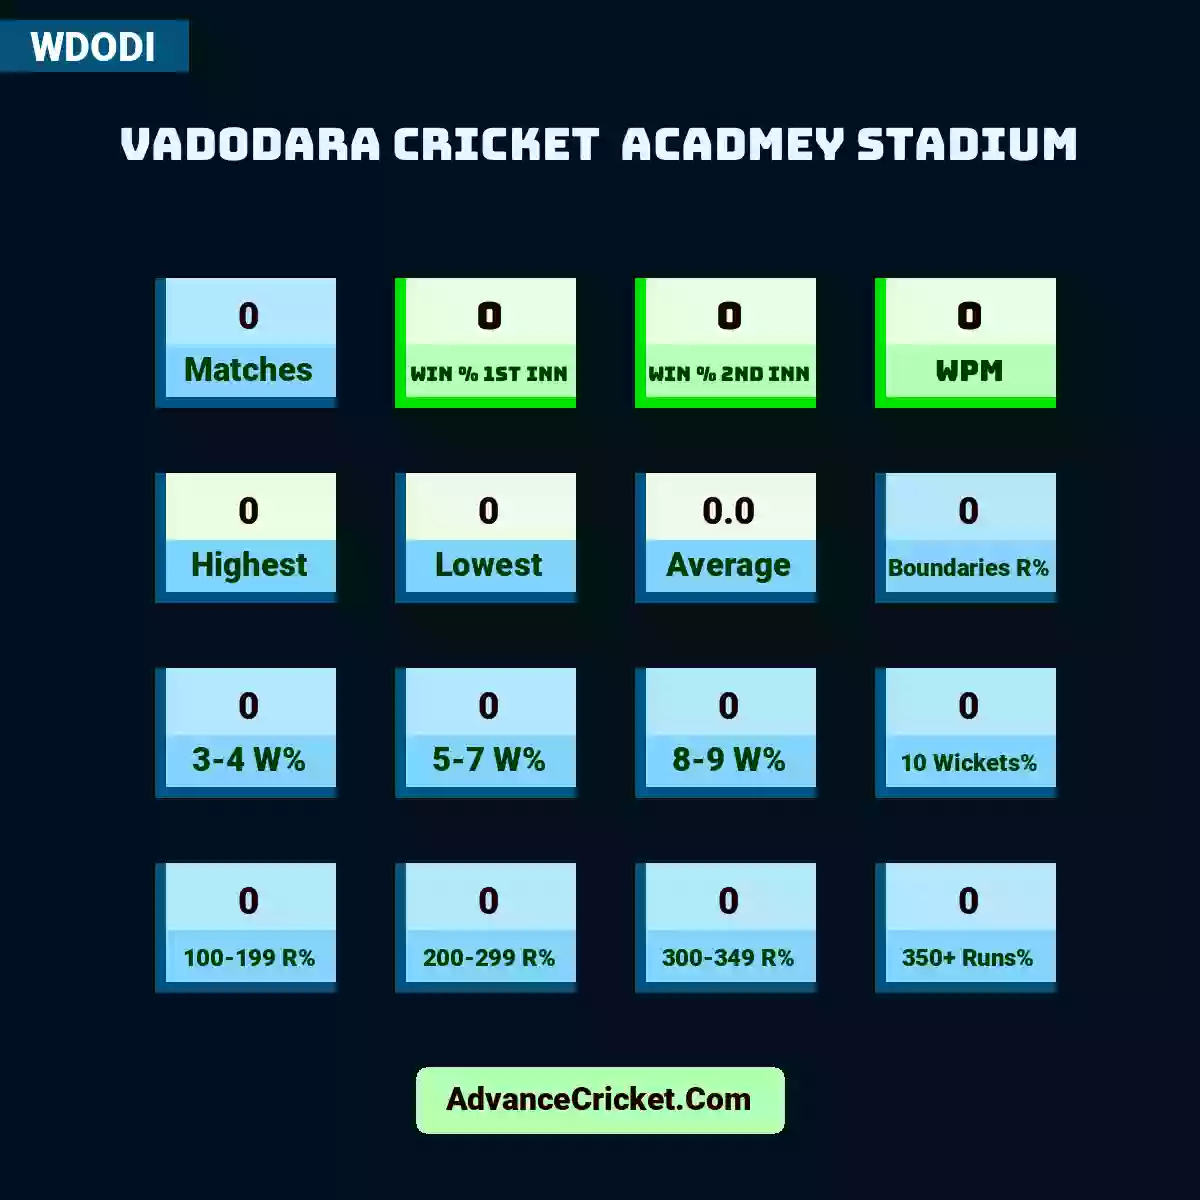 Image showing Vadodara Cricket  Acadmey Stadium with Matches: 0, Win % 1st Inn: 0, Win % 2nd Inn: 0, WPM: 0, Highest: 0, Lowest: 0, Average: 0.0, Boundaries R%: 0, 3-4 W%: 0, 5-7 W%: 0, 8-9 W%: 0, 10 Wickets%: 0, 100-199 R%: 0, 200-299 R%: 0, 300-349 R%: 0, 350+ Runs%: 0.